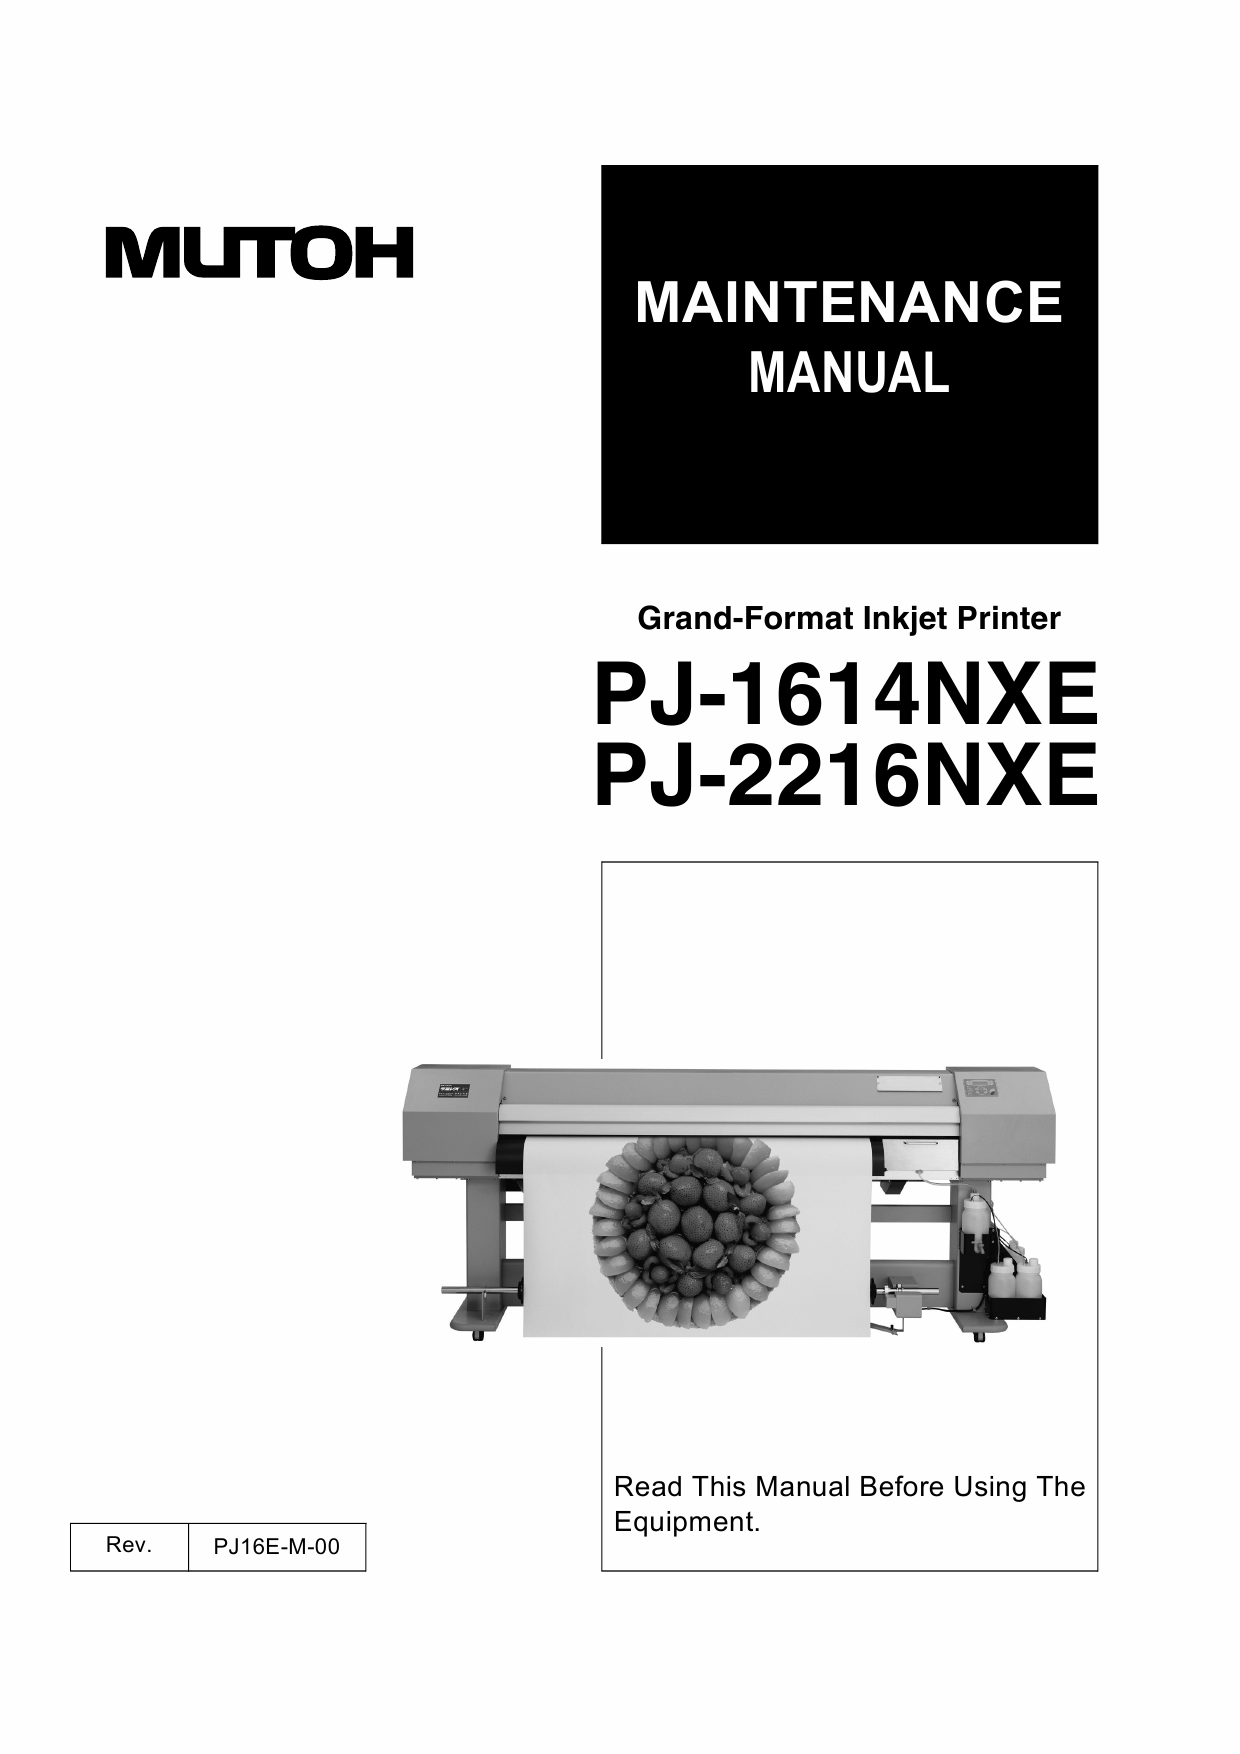 MUTOH PJ 1614 2216 NEX Service Manual-1